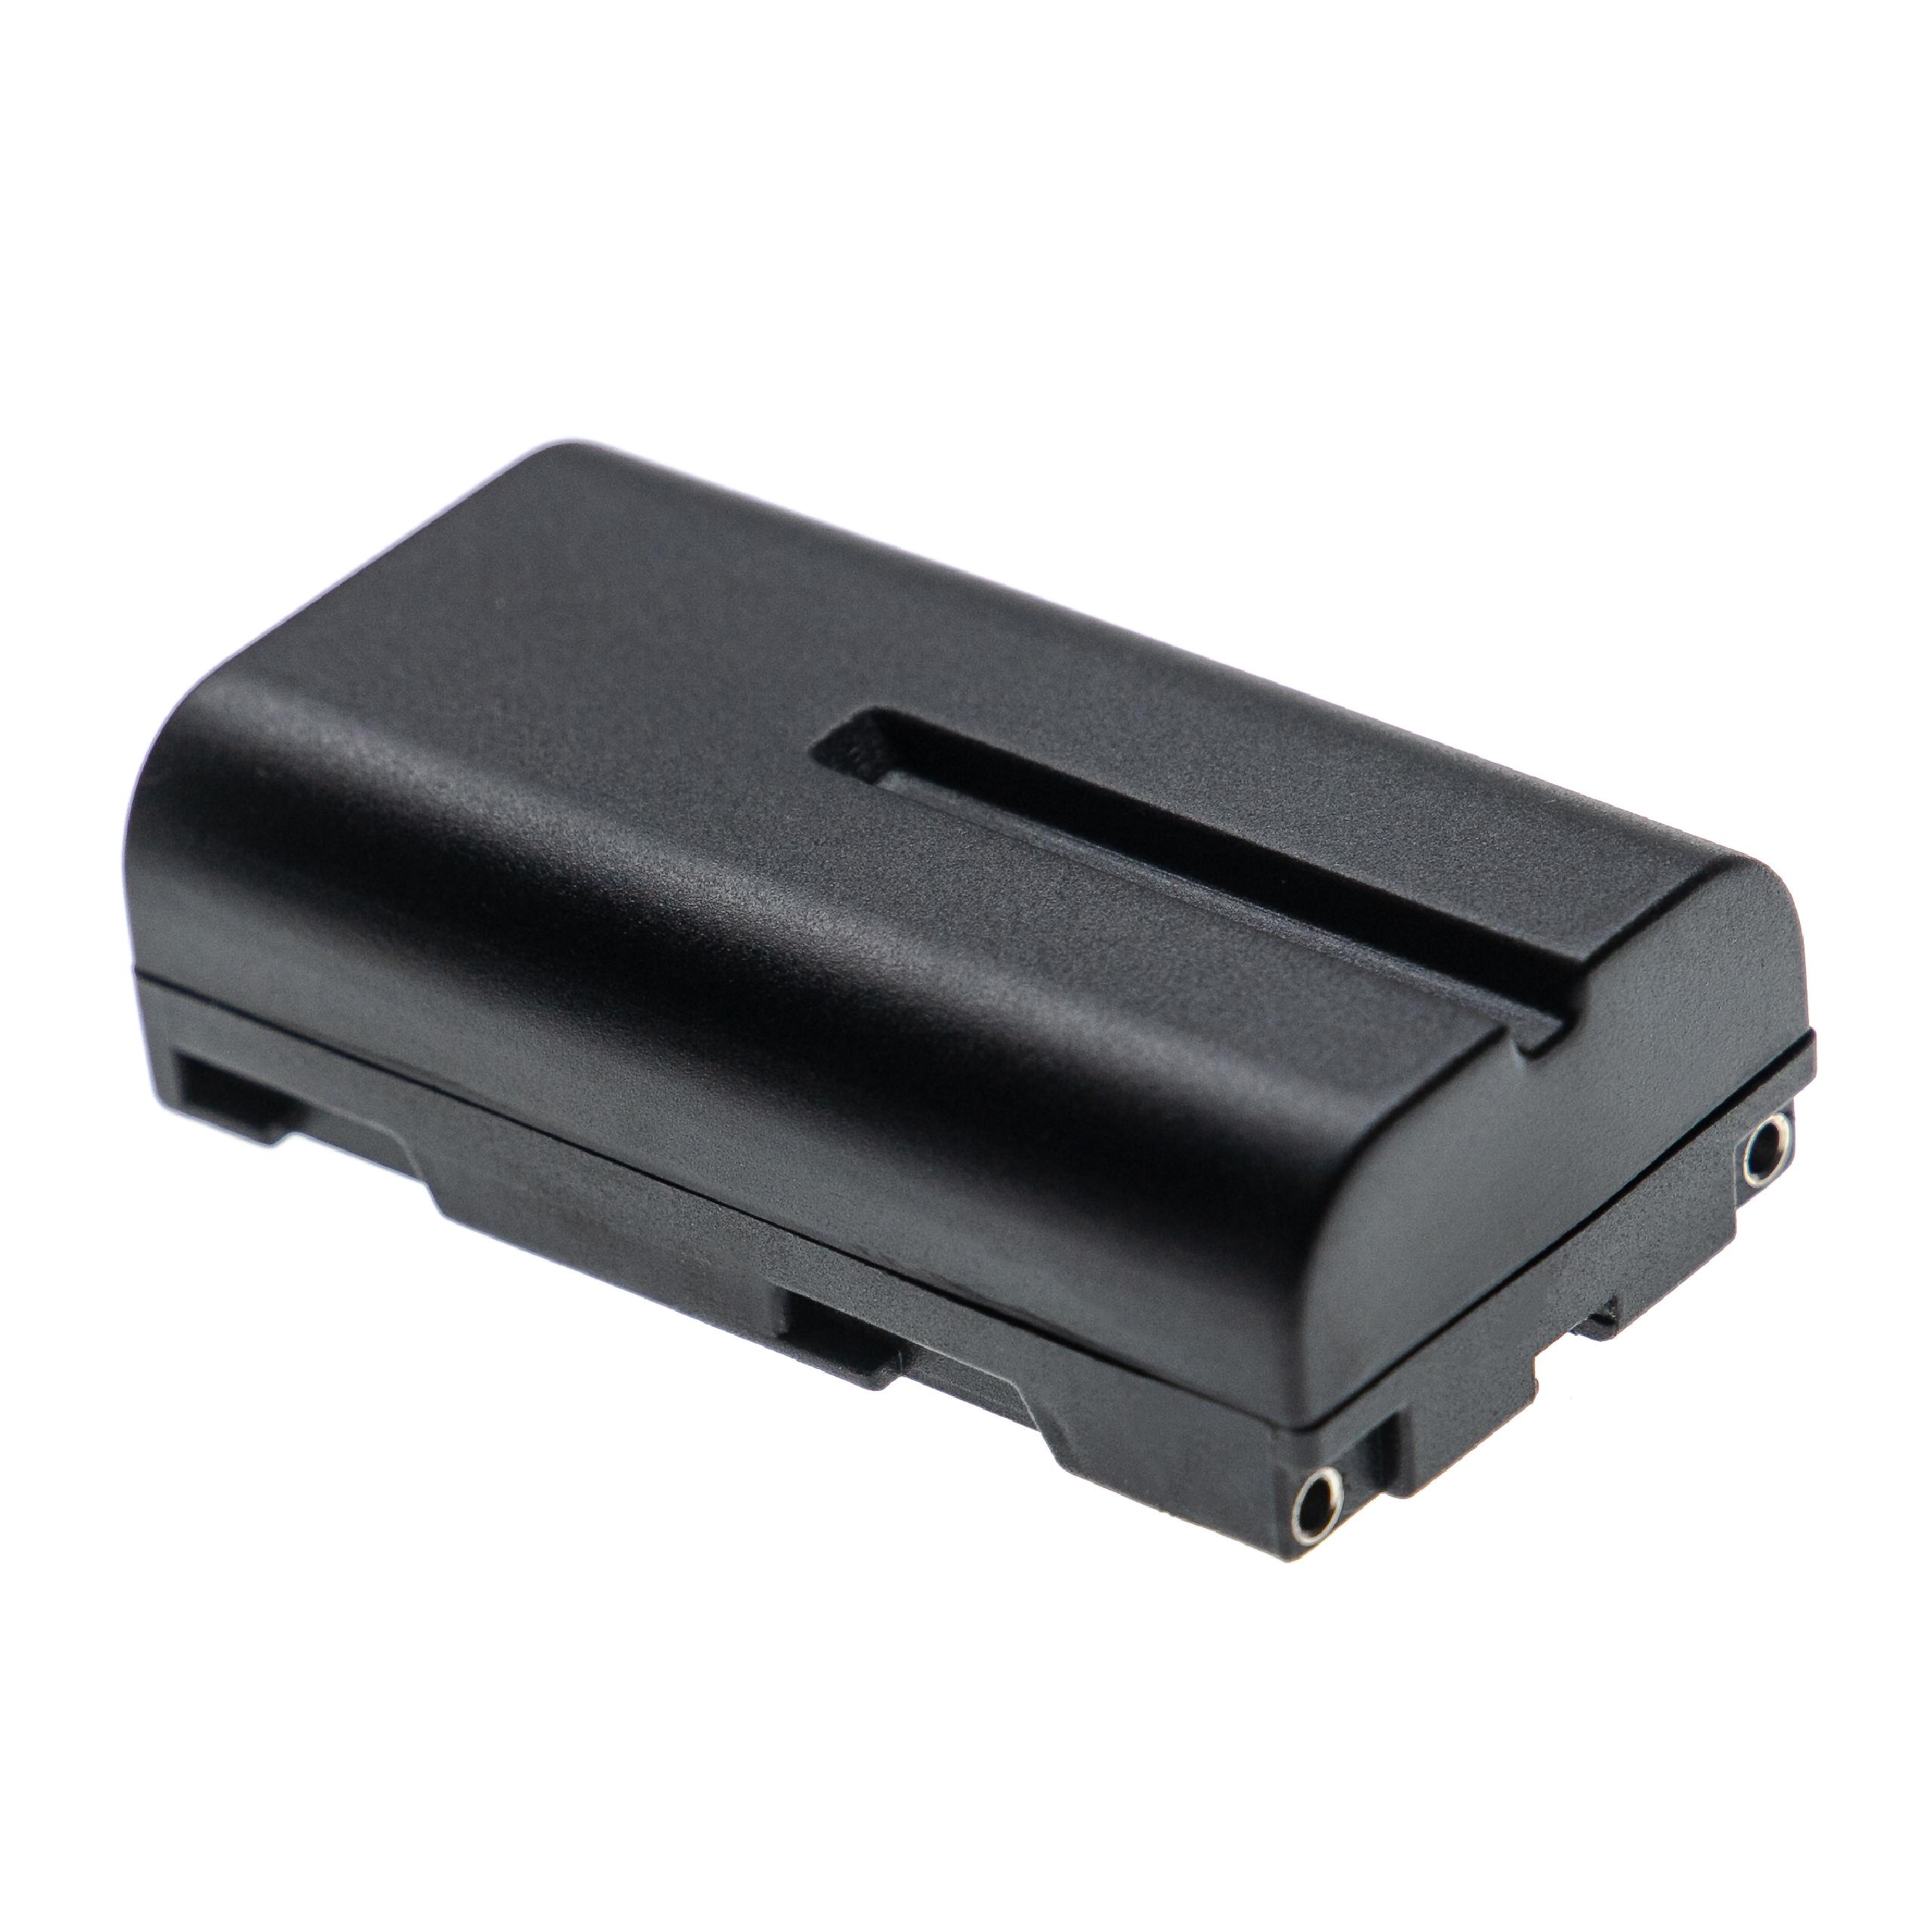 Akumulator do drukarki / drukarki etykiet zamiennik Epson C32C831091, LIP-2500, NP-500 - 2600 mAh 7,4 V Li-Ion